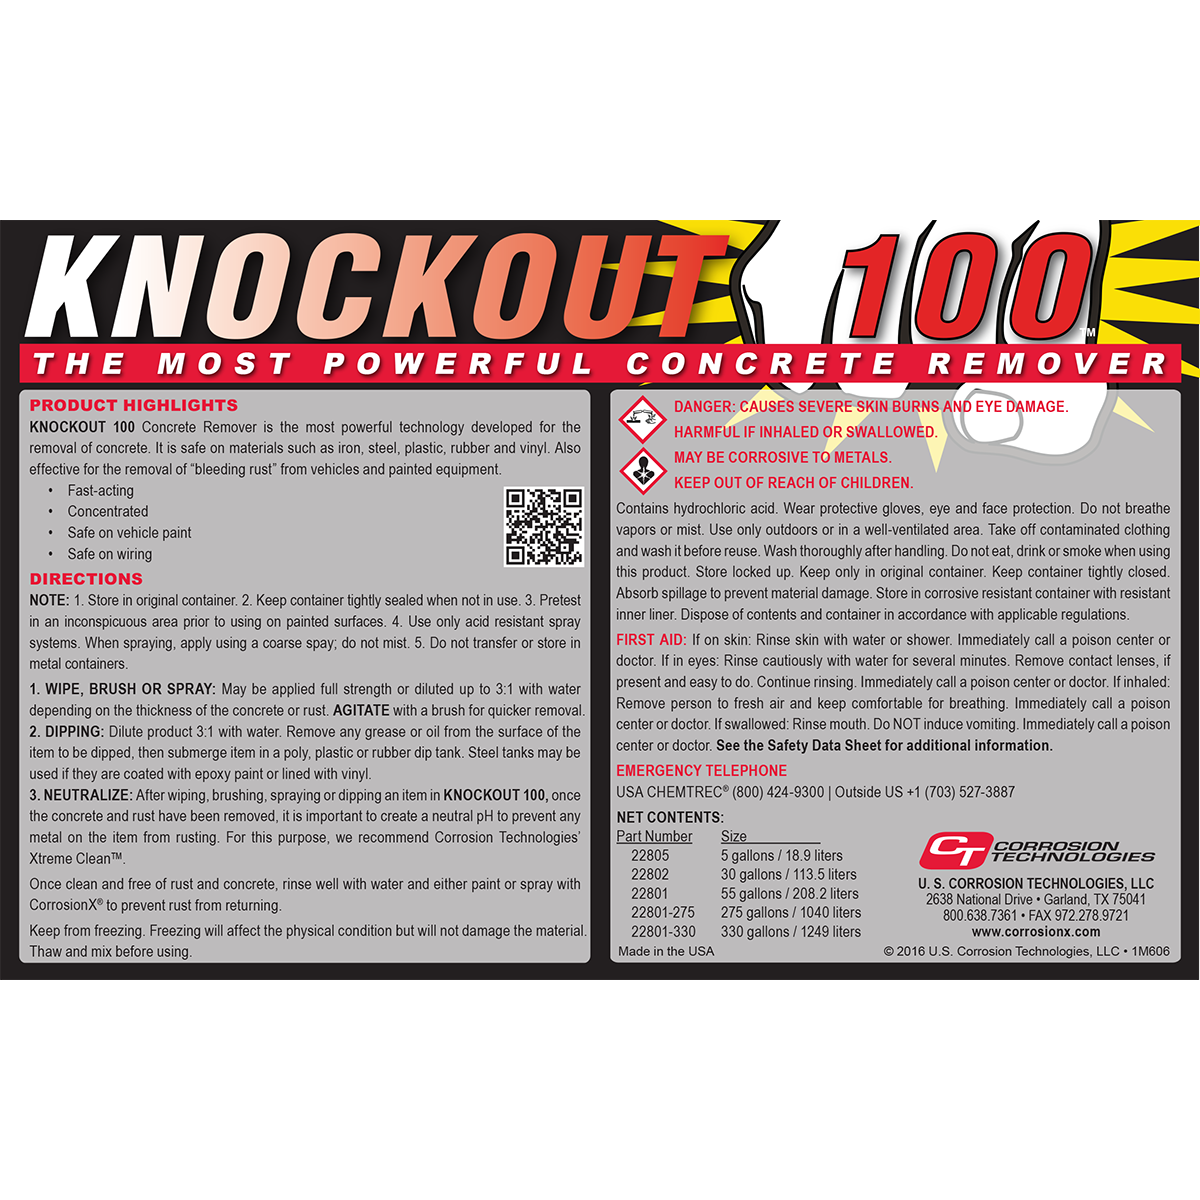 Knockout 100 heavy-duty concrete remover